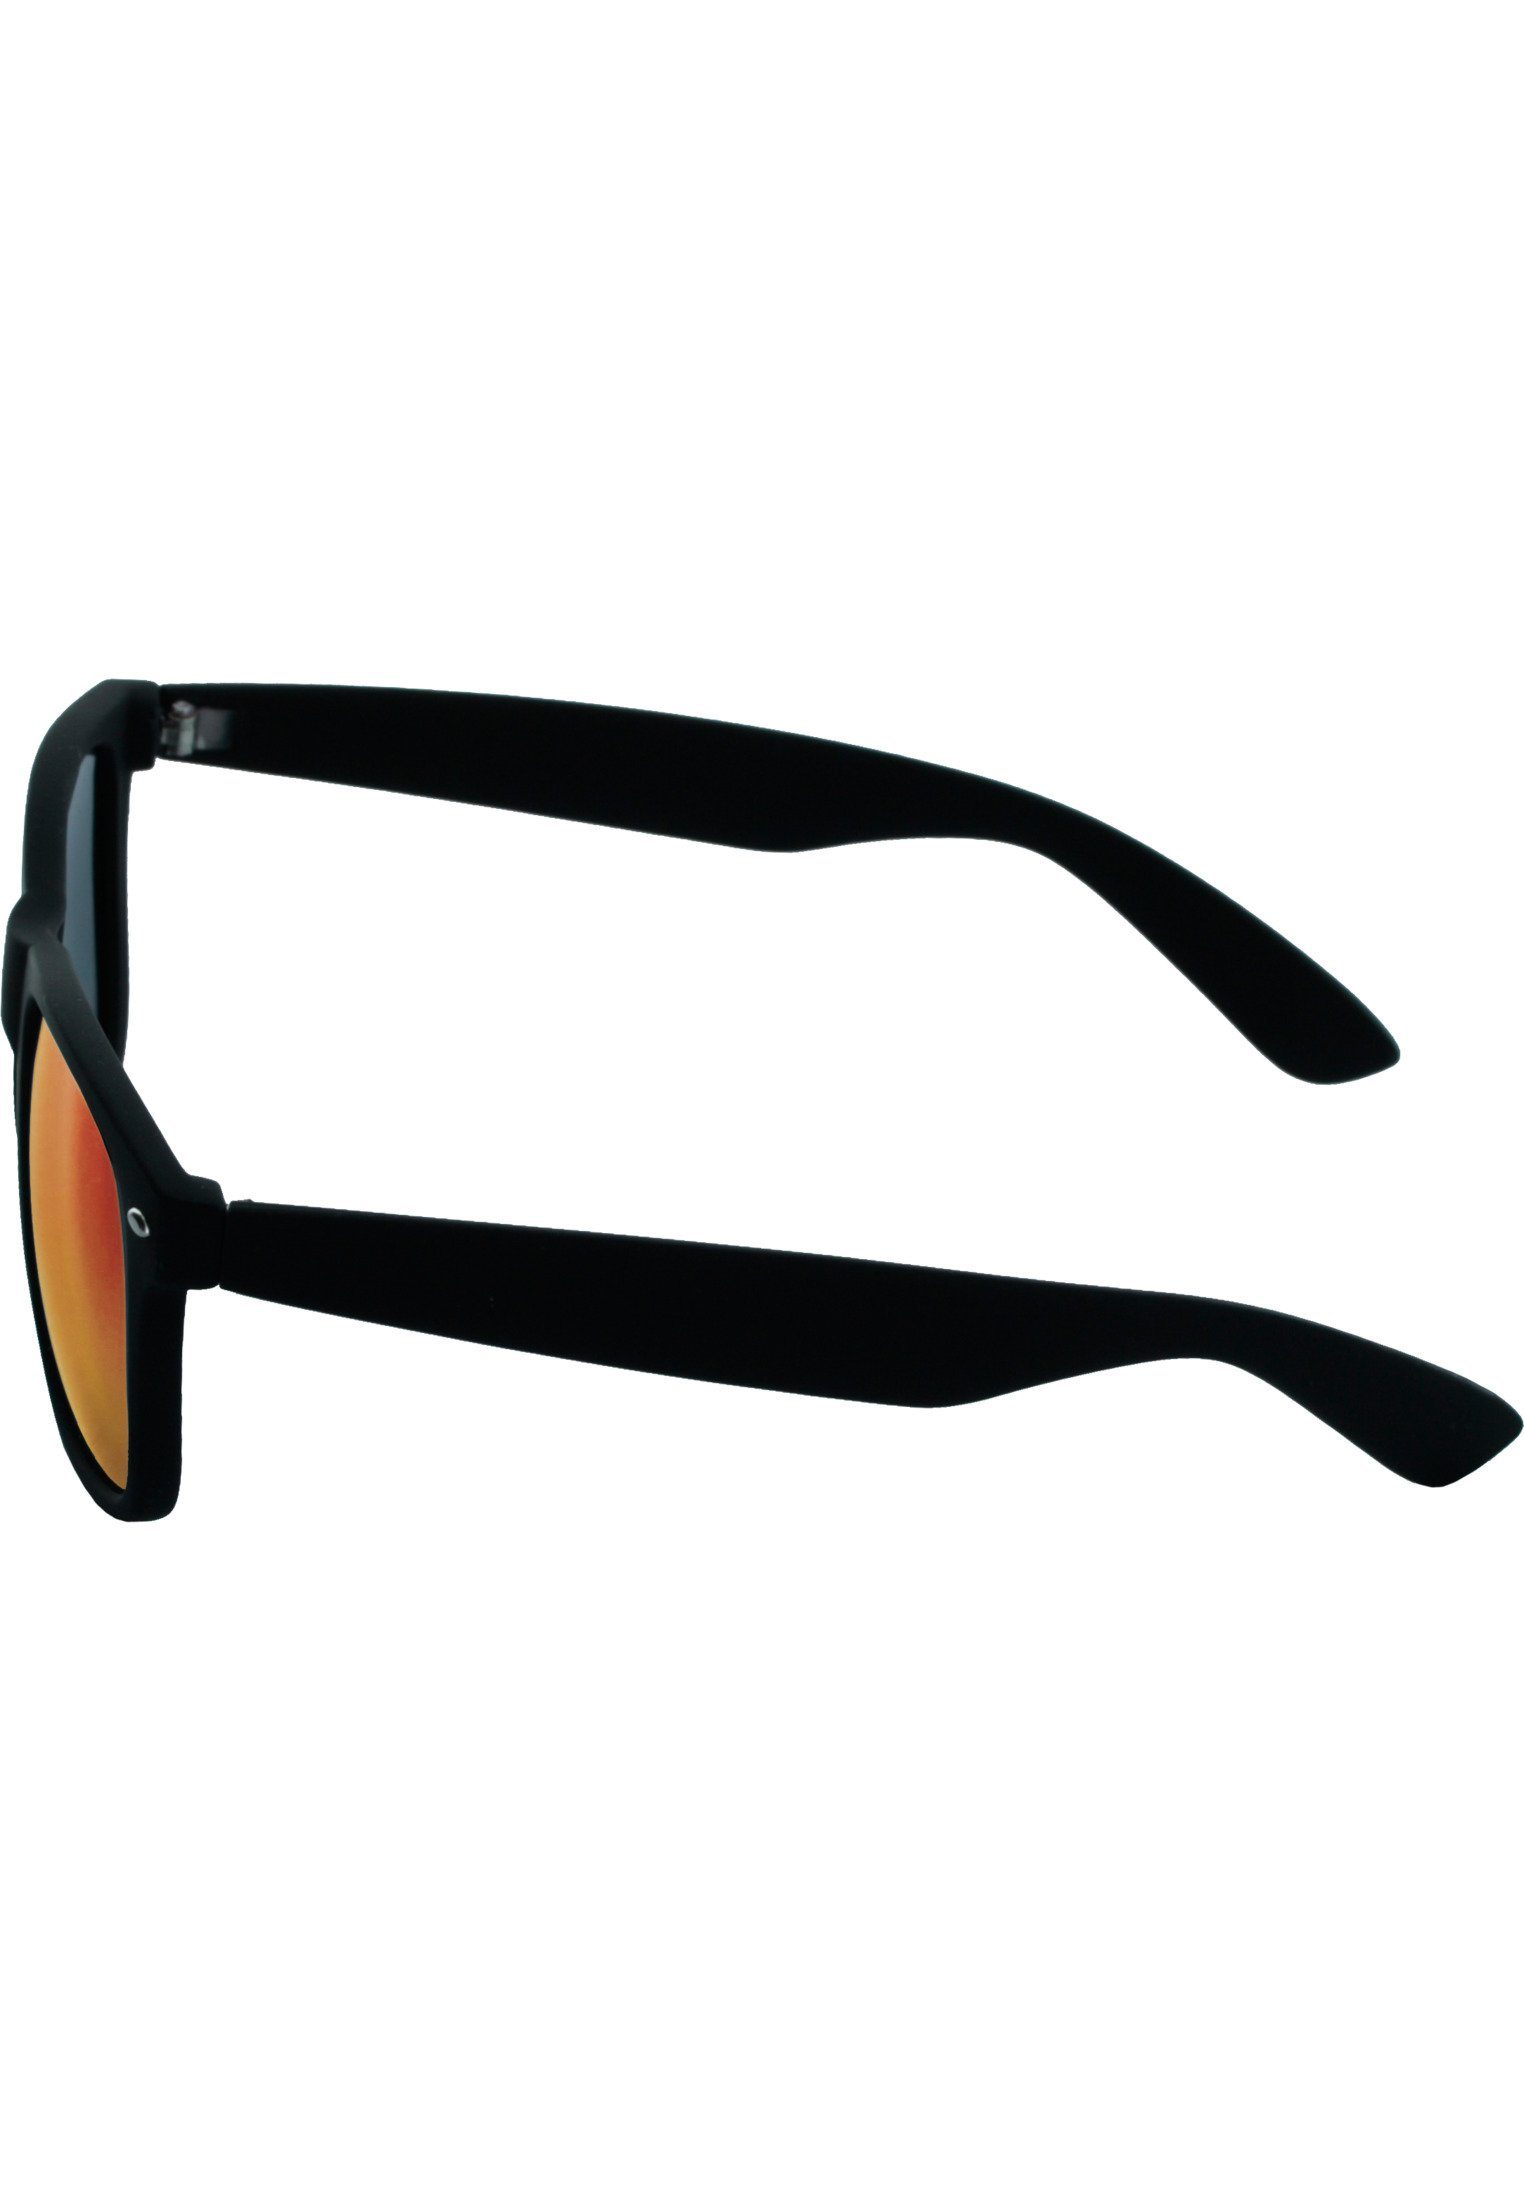 blk/orange Sonnenbrille Sunglasses Mirror MSTRDS Likoma Accessoires